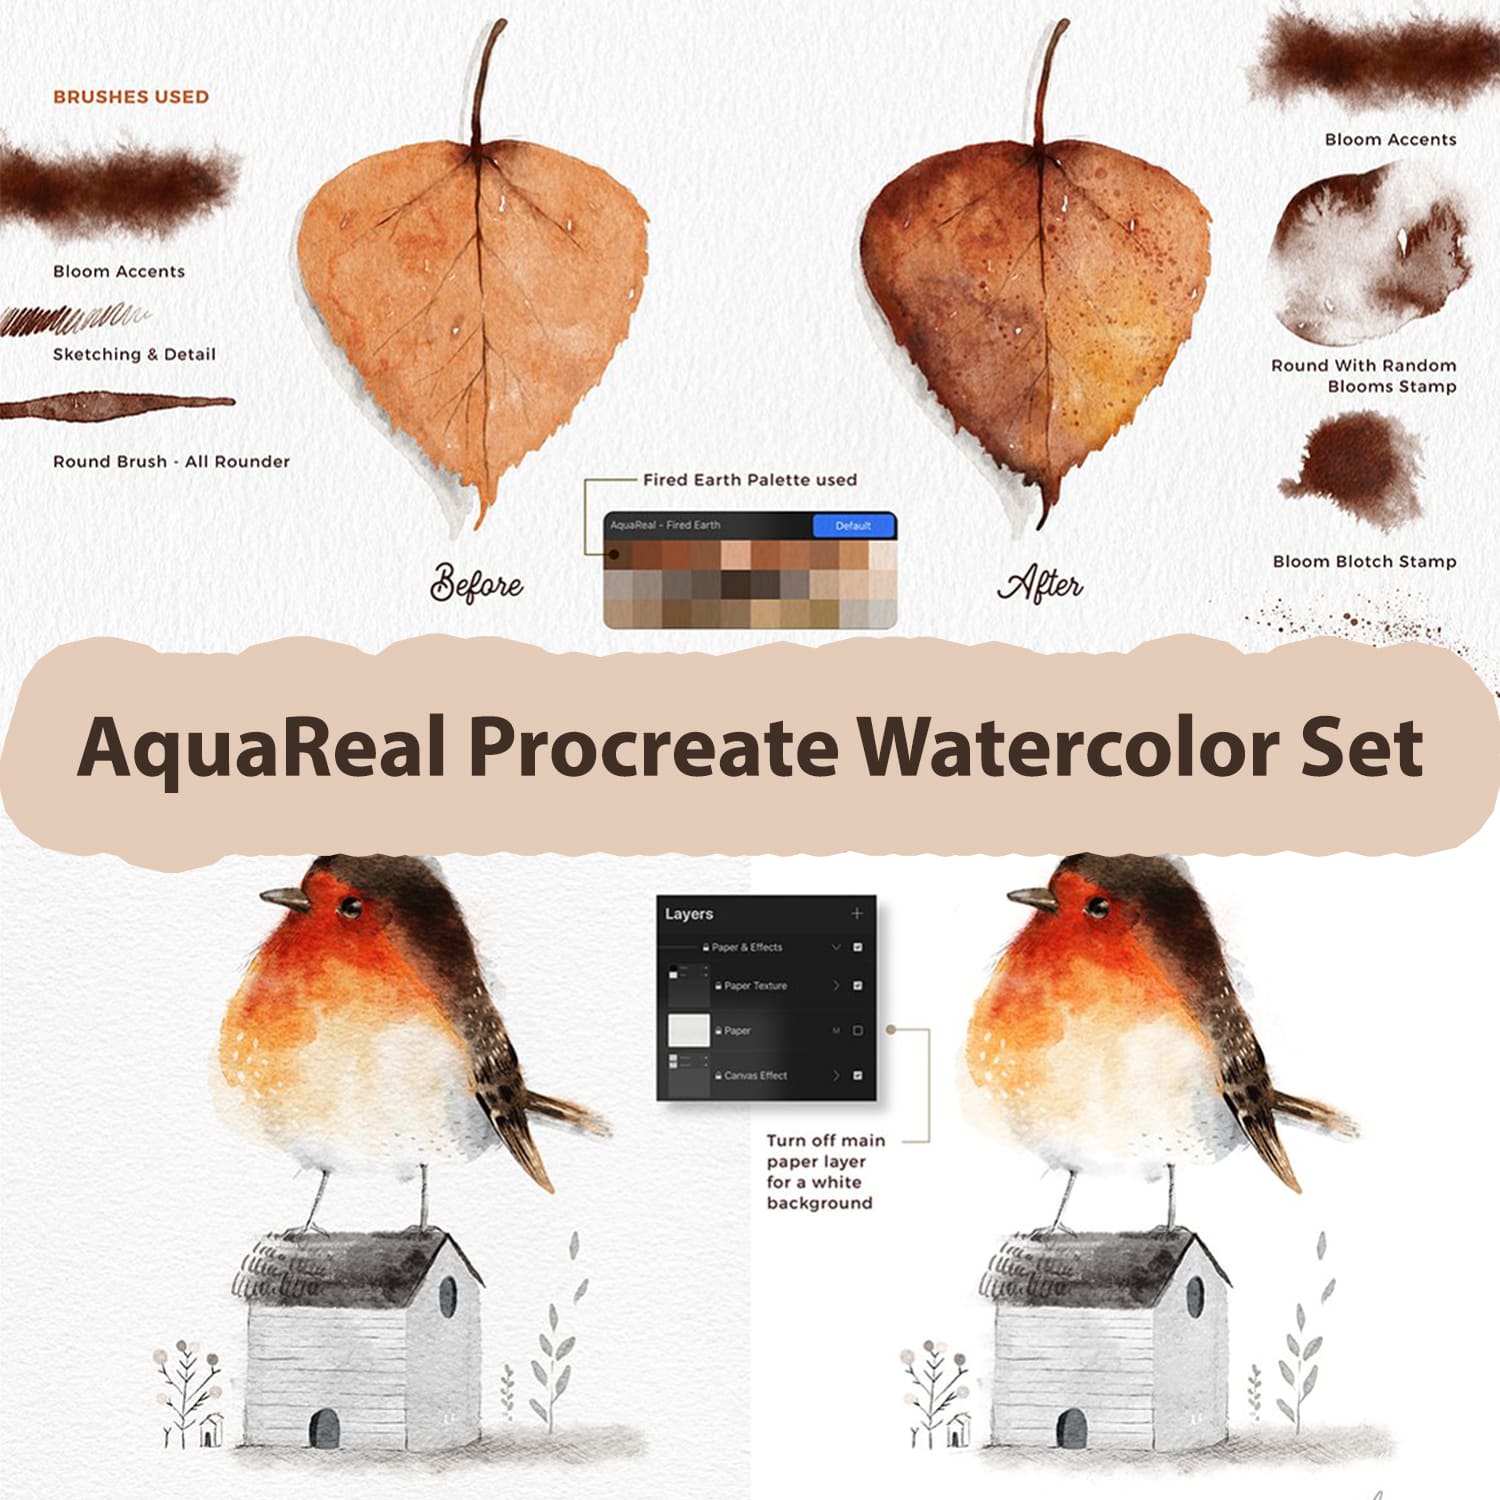 AquaReal Procreate Watercolor Set cover image.